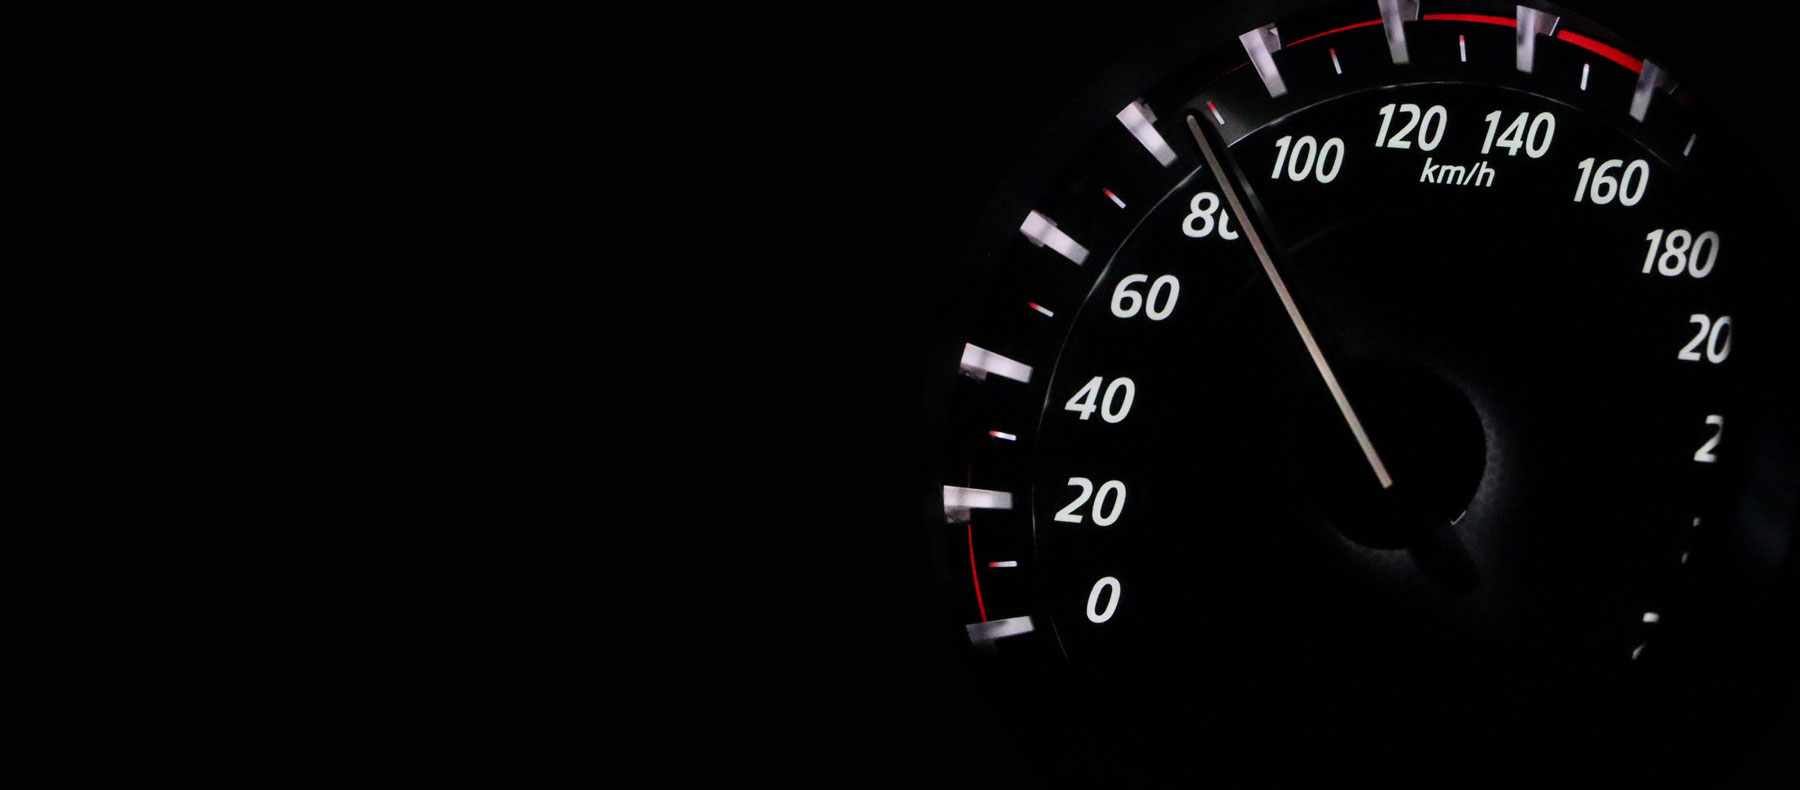 Speed of vehicle on Speedometer